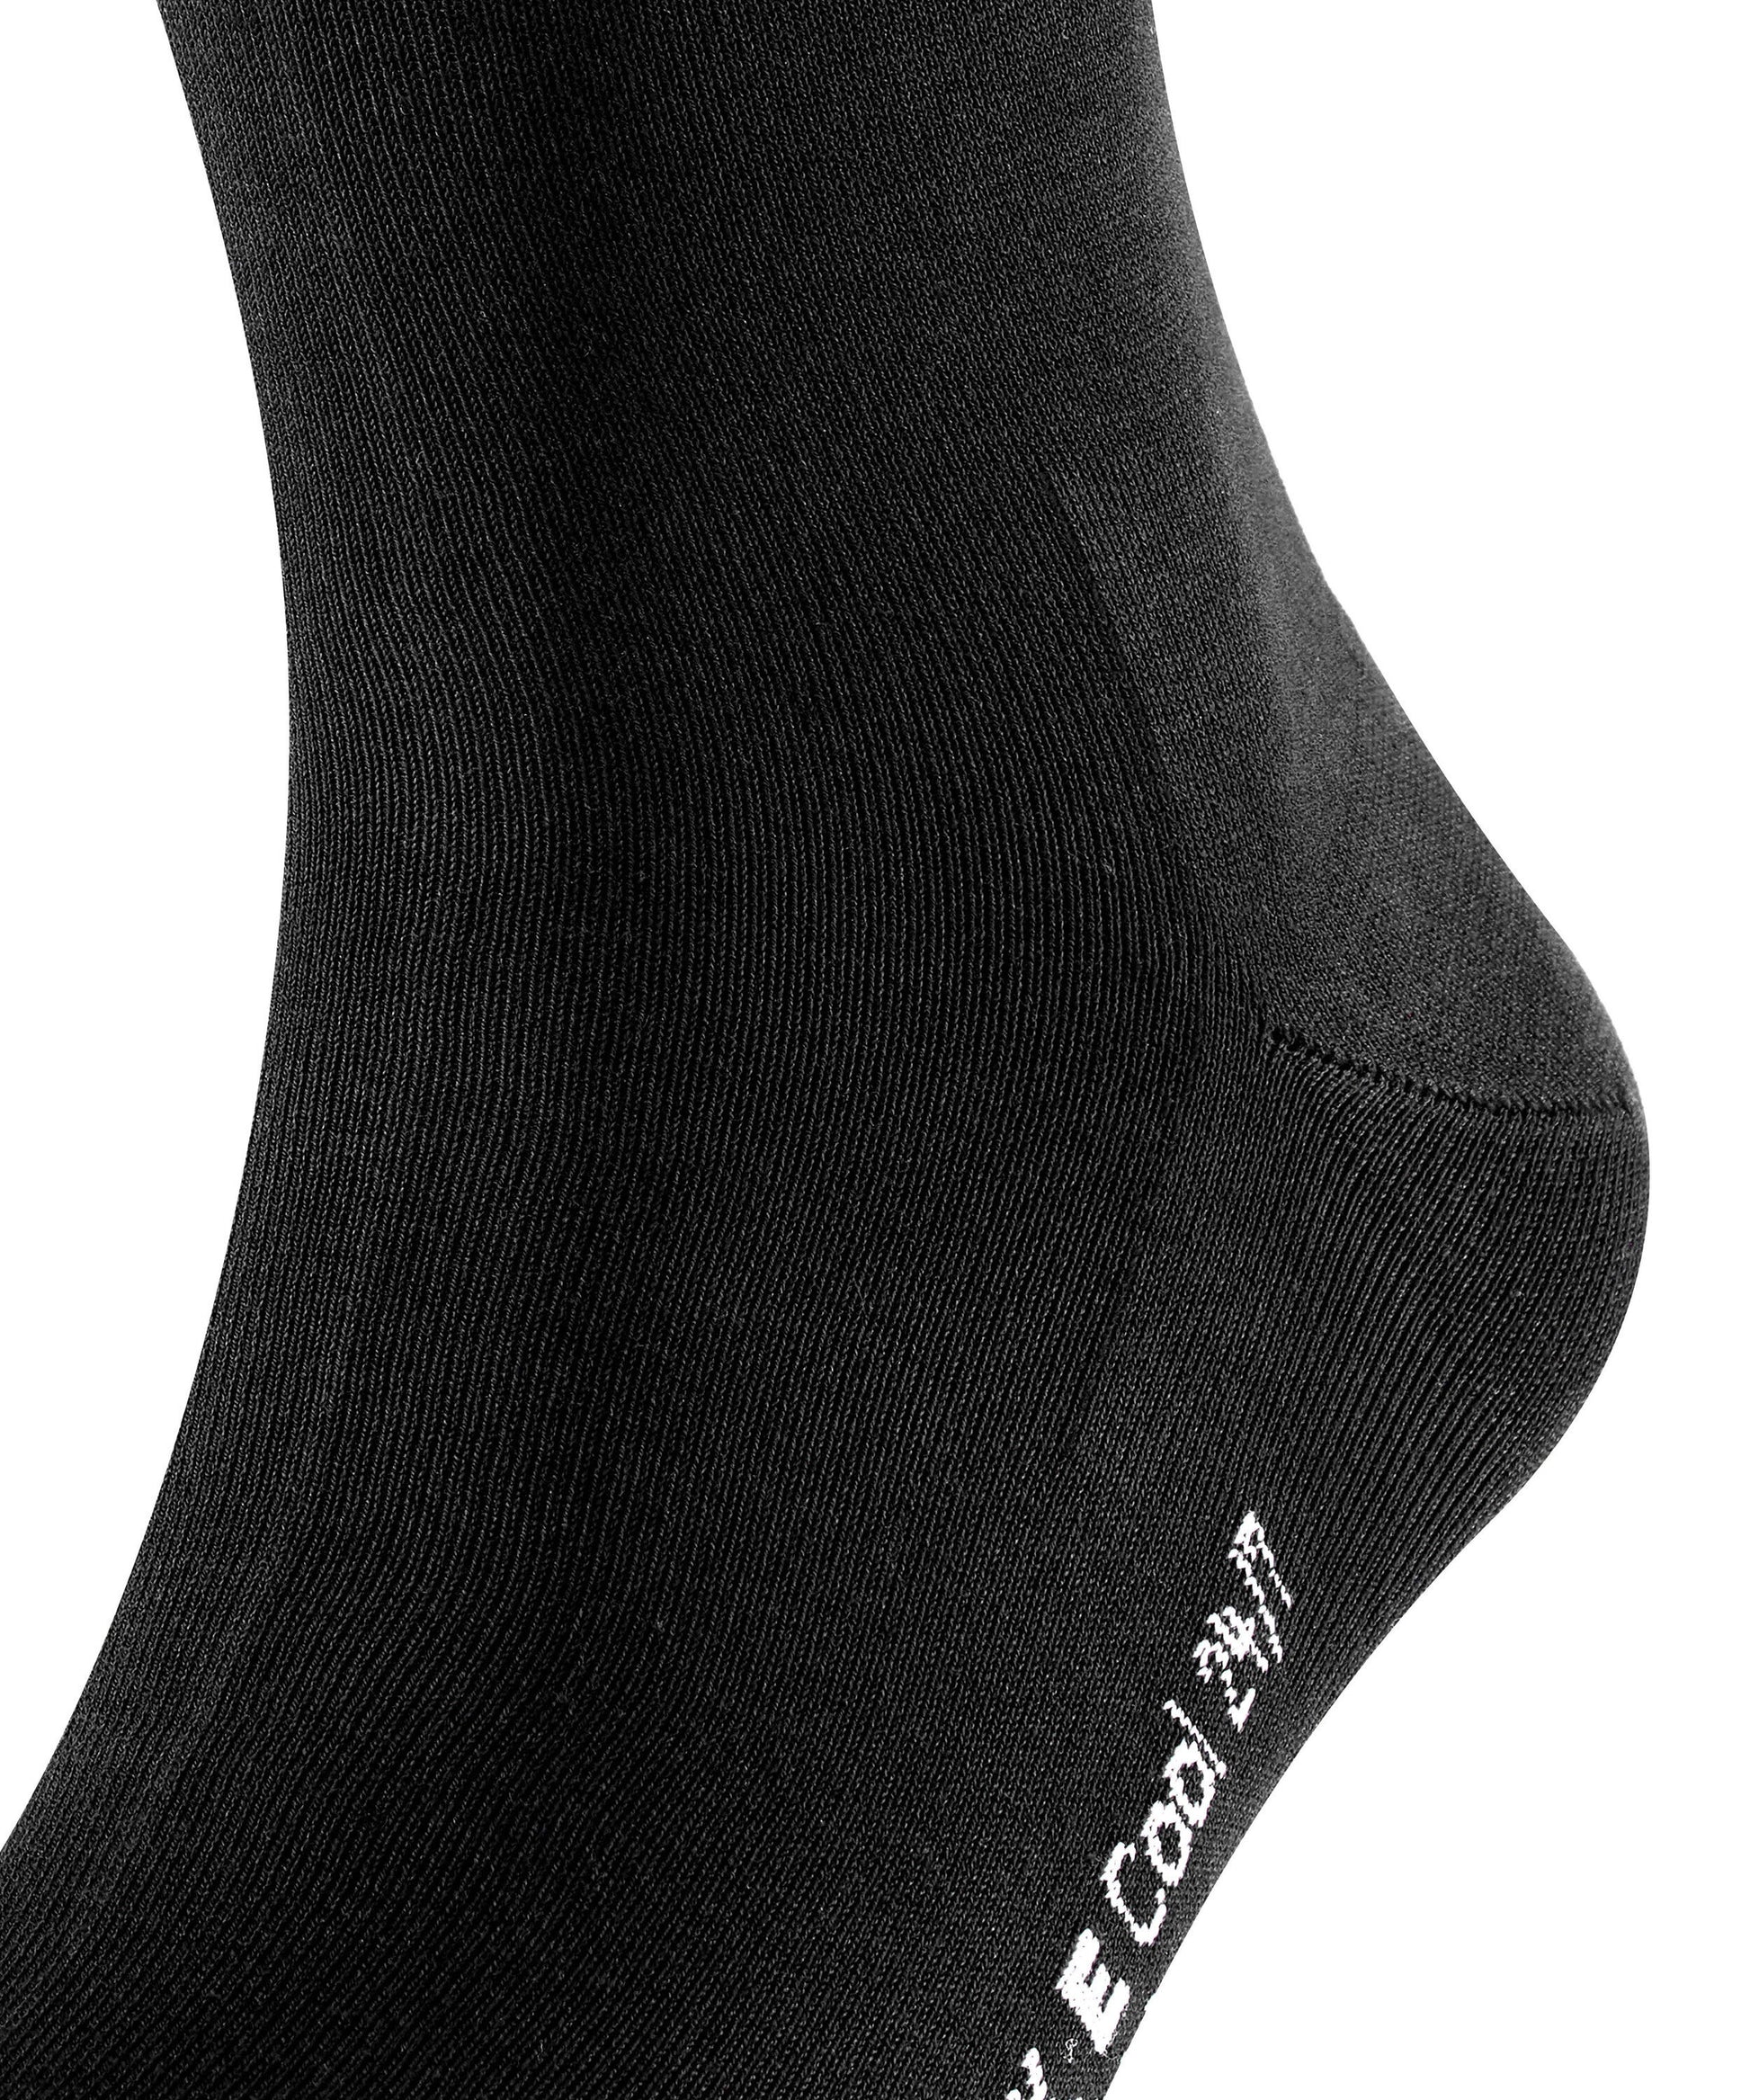 Socken Cool 24/7 (Black)